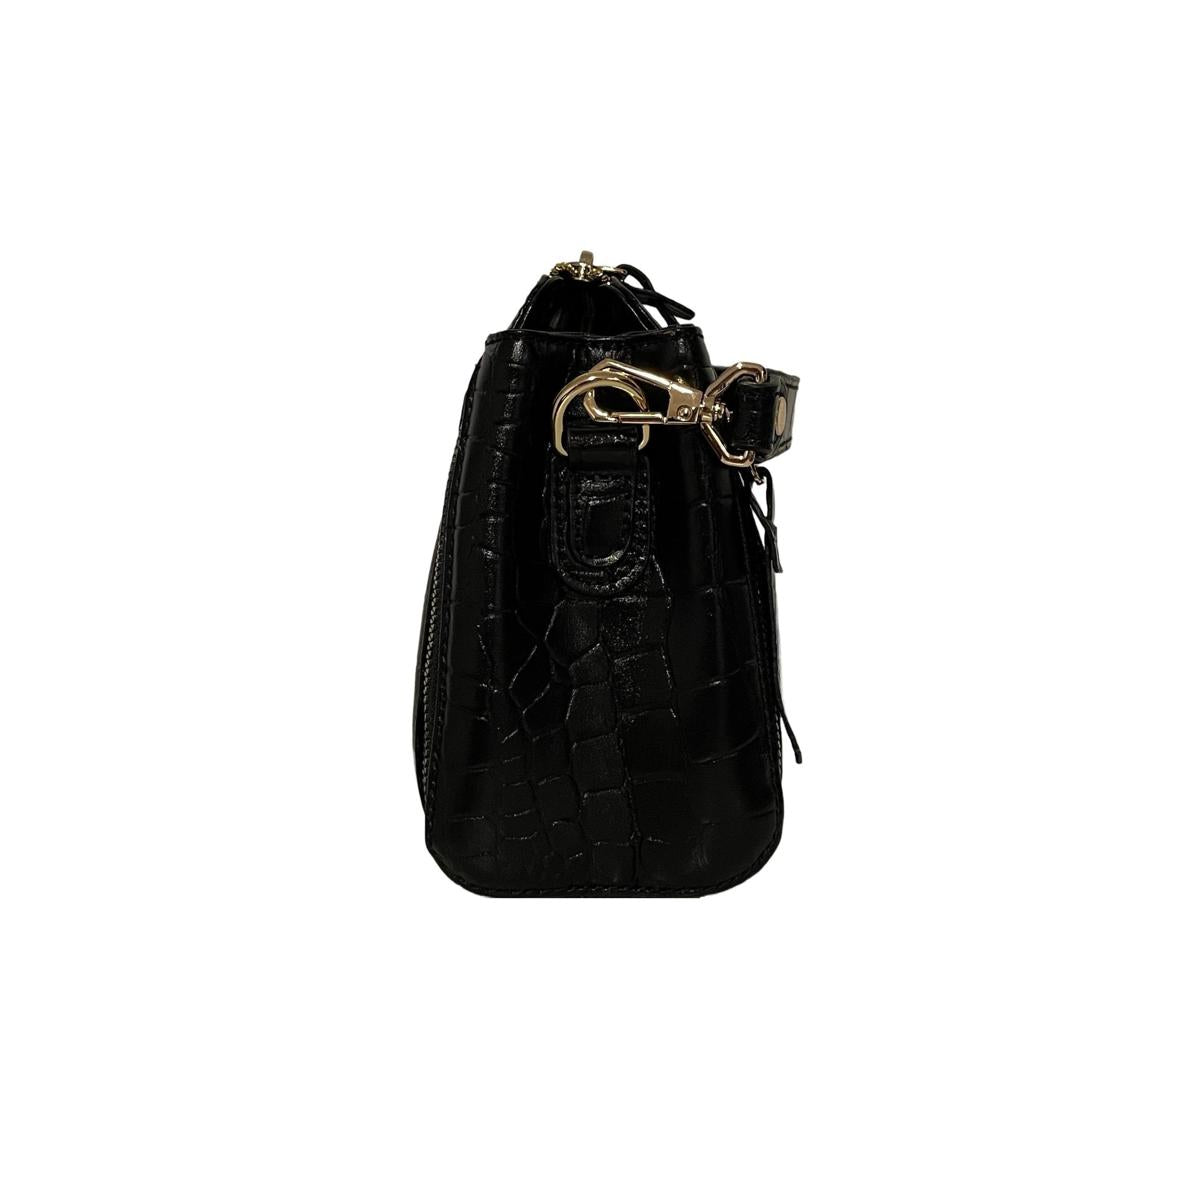 LeatherLuxe - Black Leather Handbag Shoulder Bag for Women Genuine leather Designer Premium leather bag for women leather hobo tote messenger bag Leather Accessories Leather Shop Leather Goods